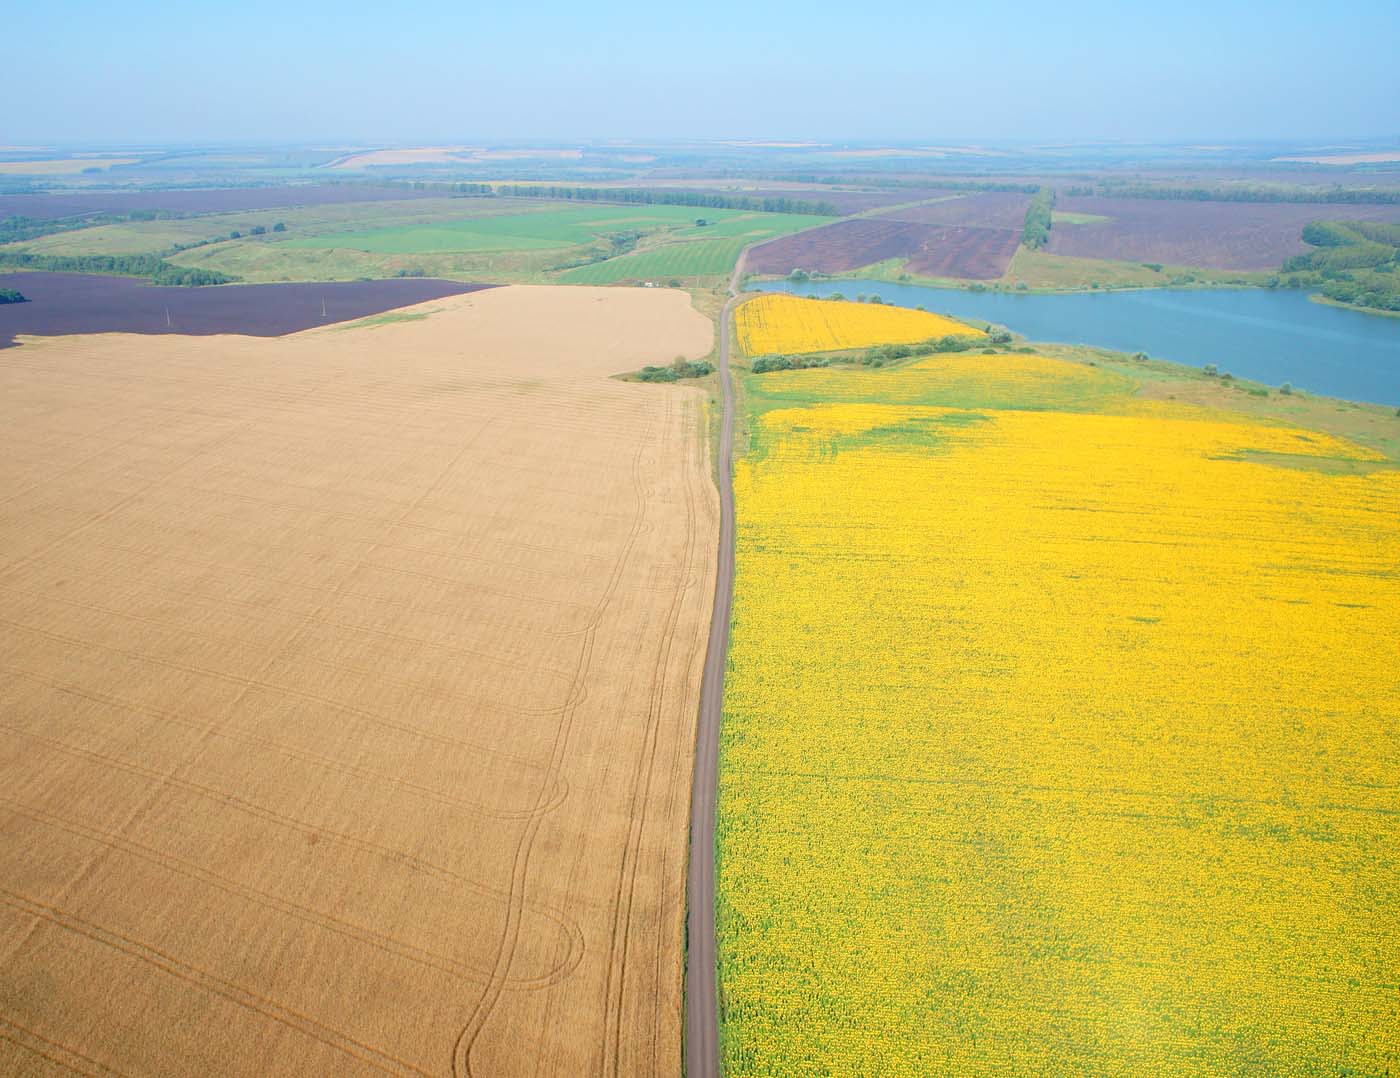 #aero #aerial поля, пруд, пашня, пшеница, подсолнечник, дорога, Борис Резванцев